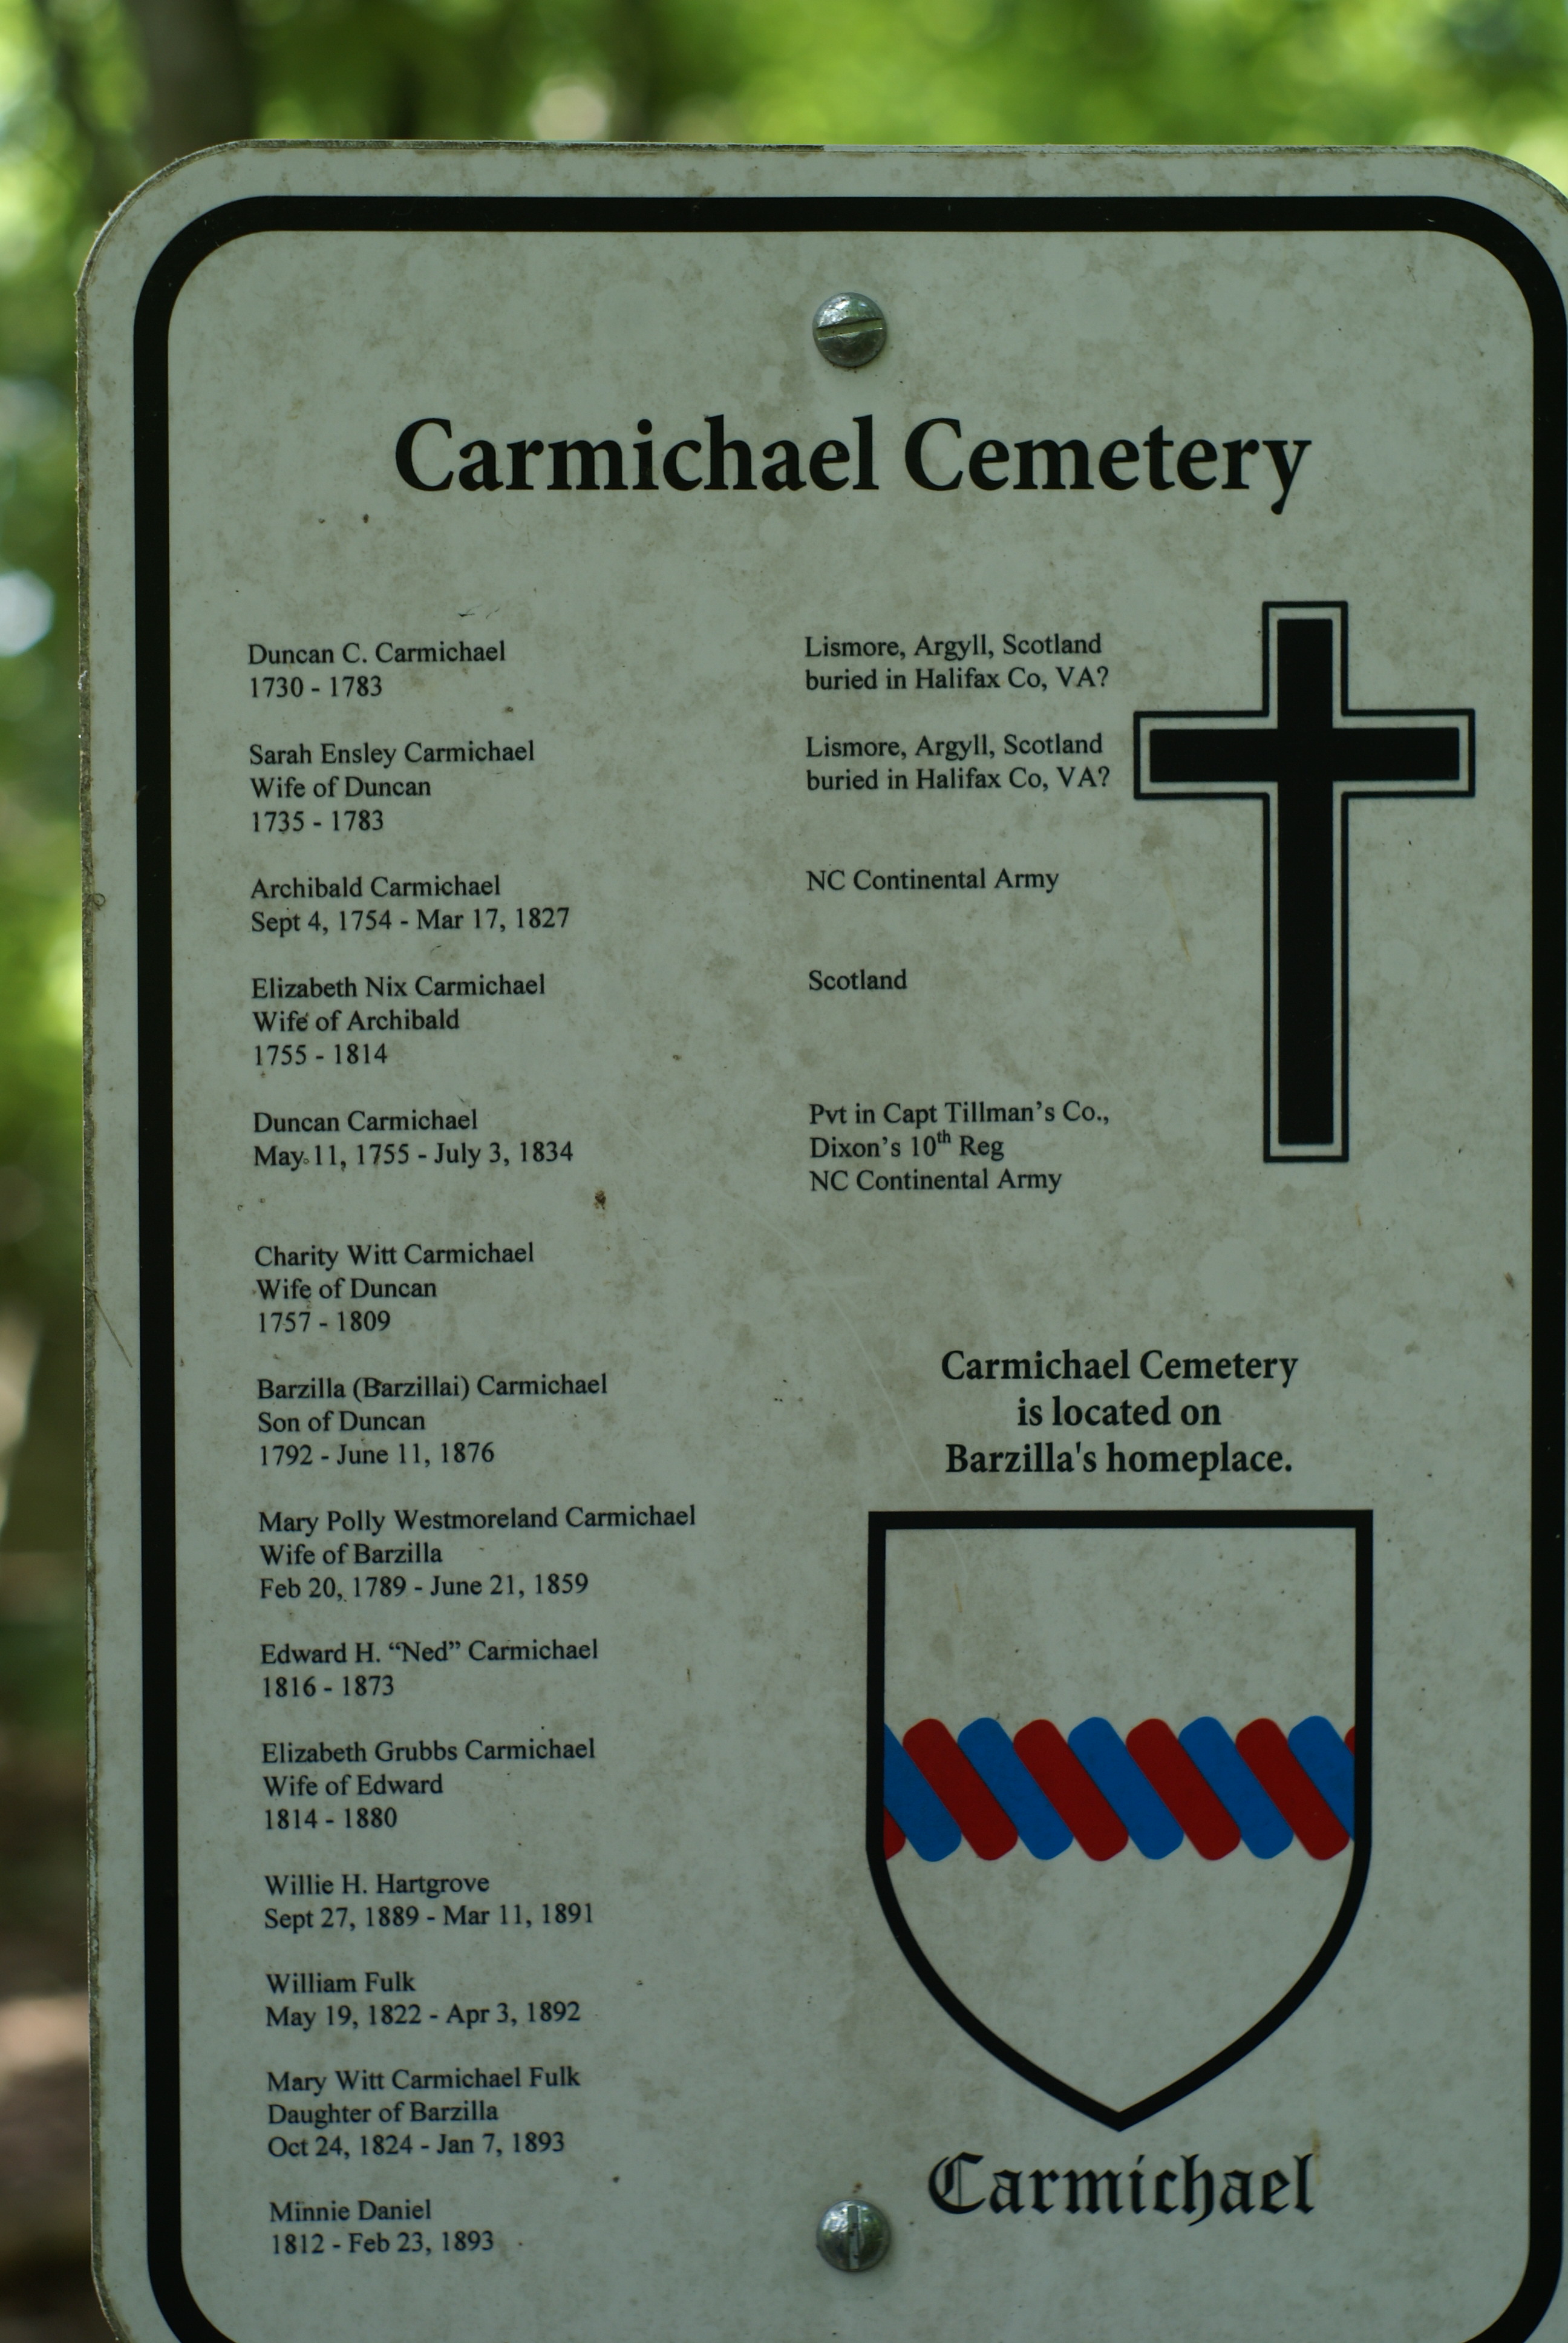 Carmichael Cemetery with Sarah Ensley - Rurall Hall NC